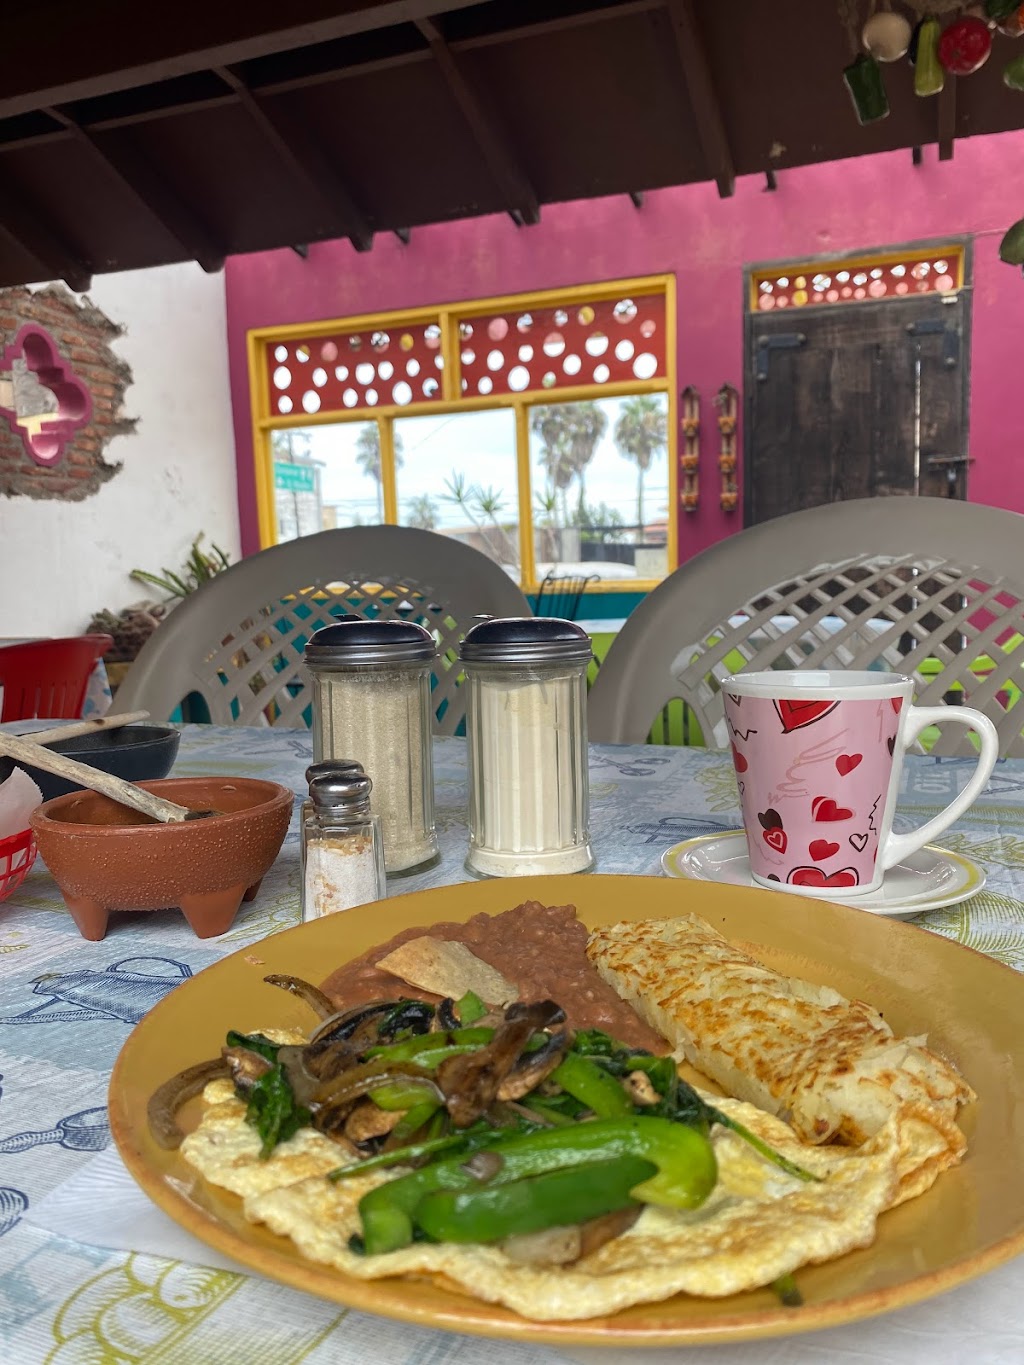 La Fuente Restaurant | Popotla 841, Villas de Rosarito, Campo Alfonso, 22713 Rosarito, B.C., Mexico | Phone: 661 121 2039